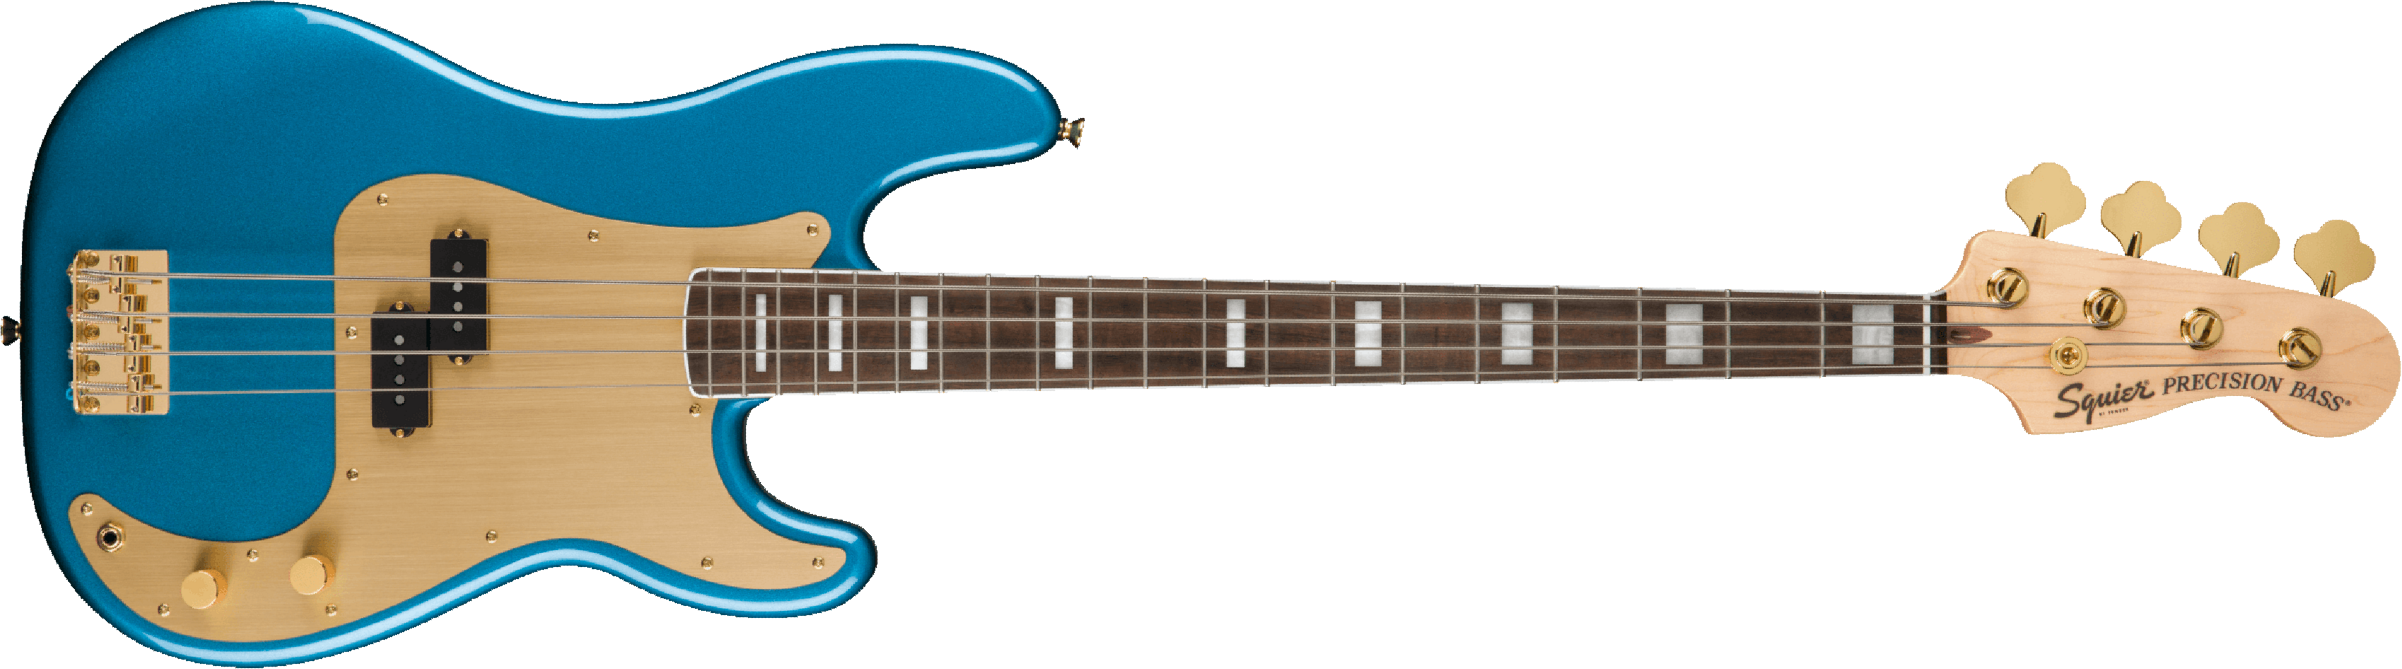 Squier Precision Bass 40th Anniversary Gold Edition Lau - Lake Placid Blue - Solid body elektrische bas - Main picture